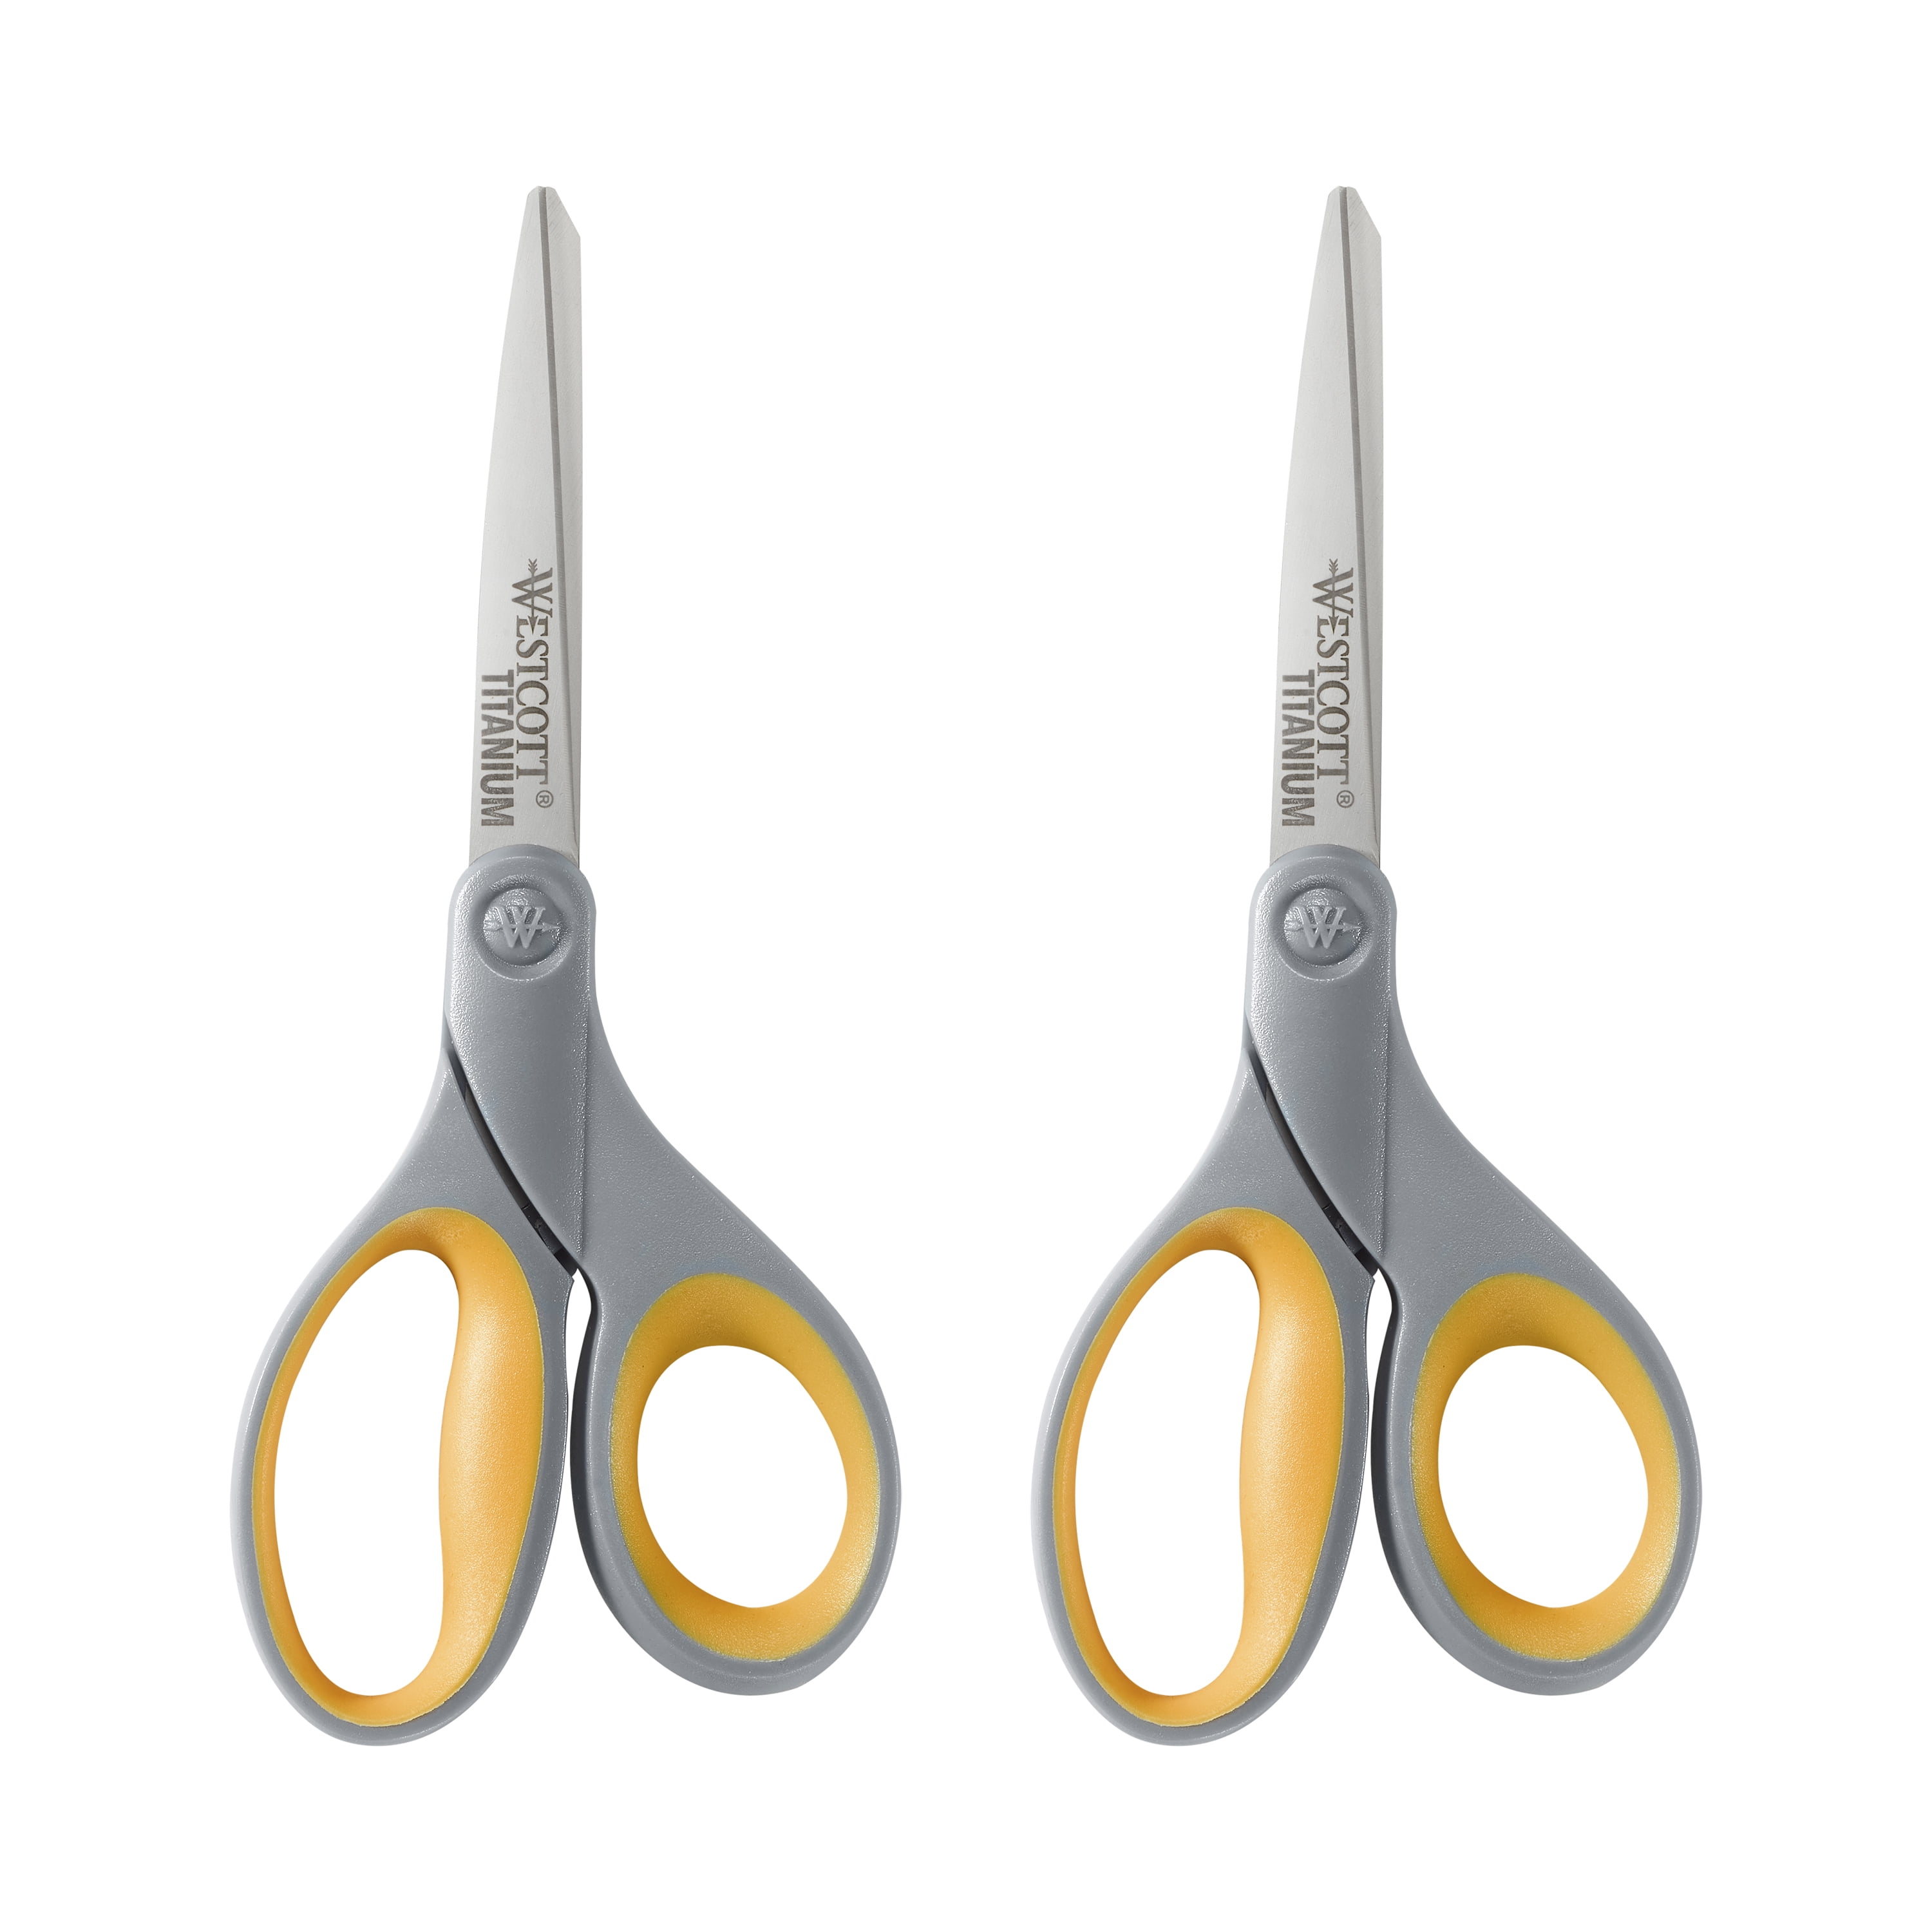 Acm13824 Westcott Titanium Bonded Scissors Set for sale online 